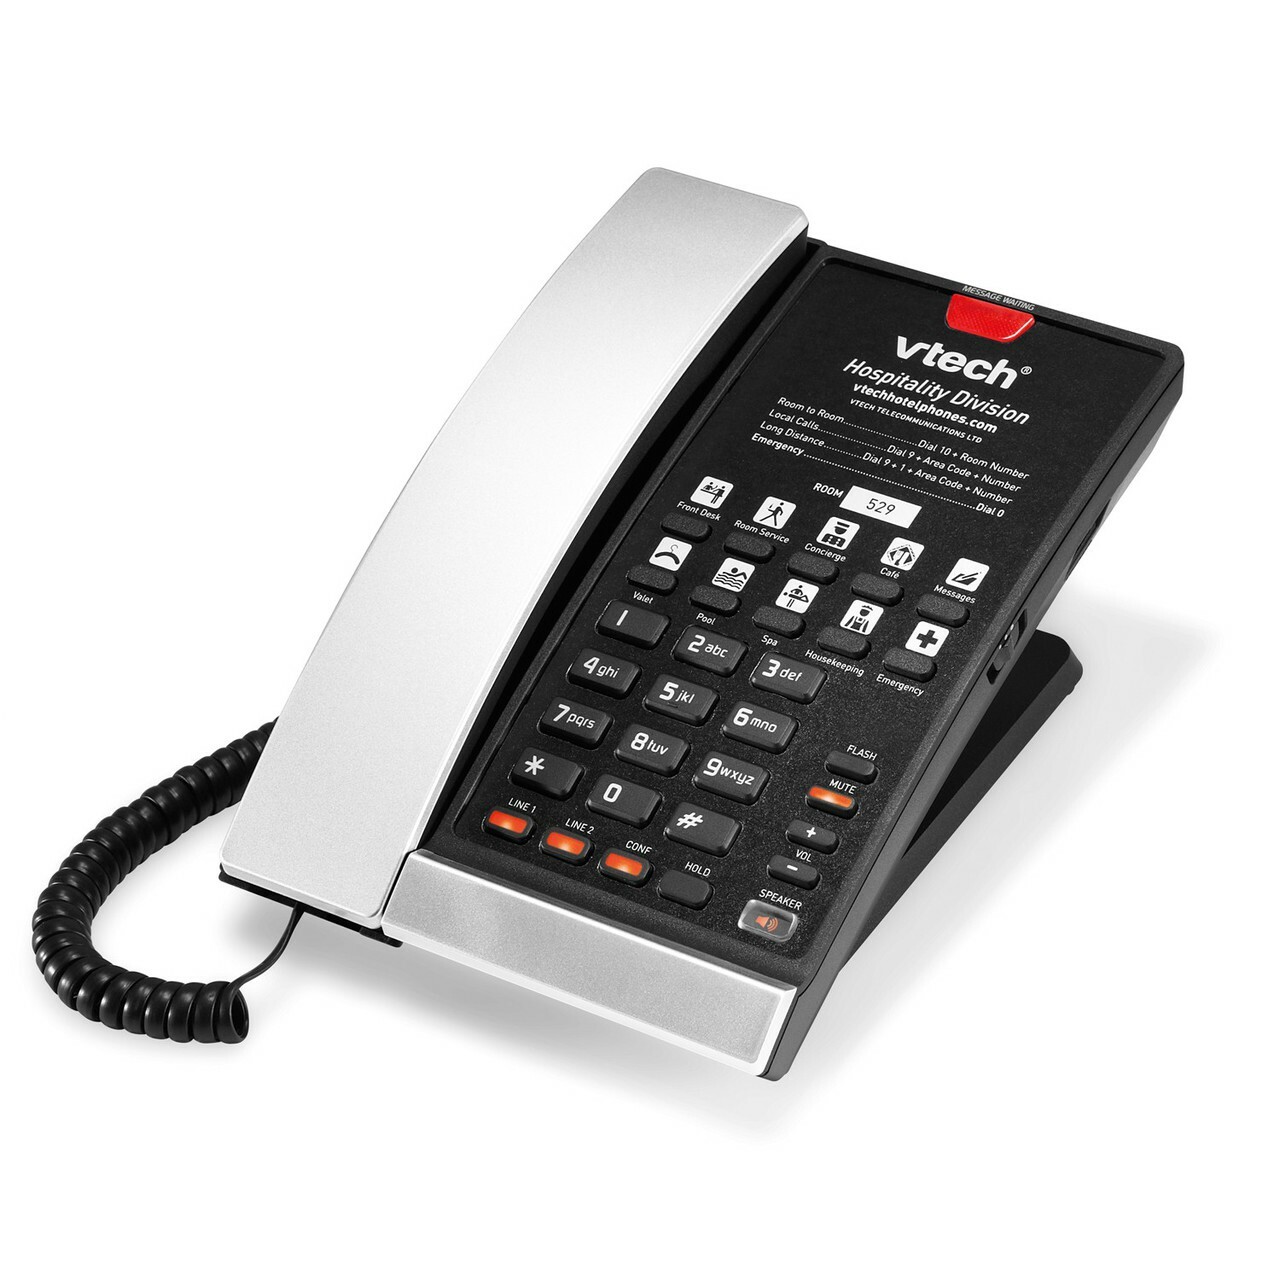 Vtech A2220 2 Line Contemporary Analog Corded Guestroom Phone -  Sliver & Black.